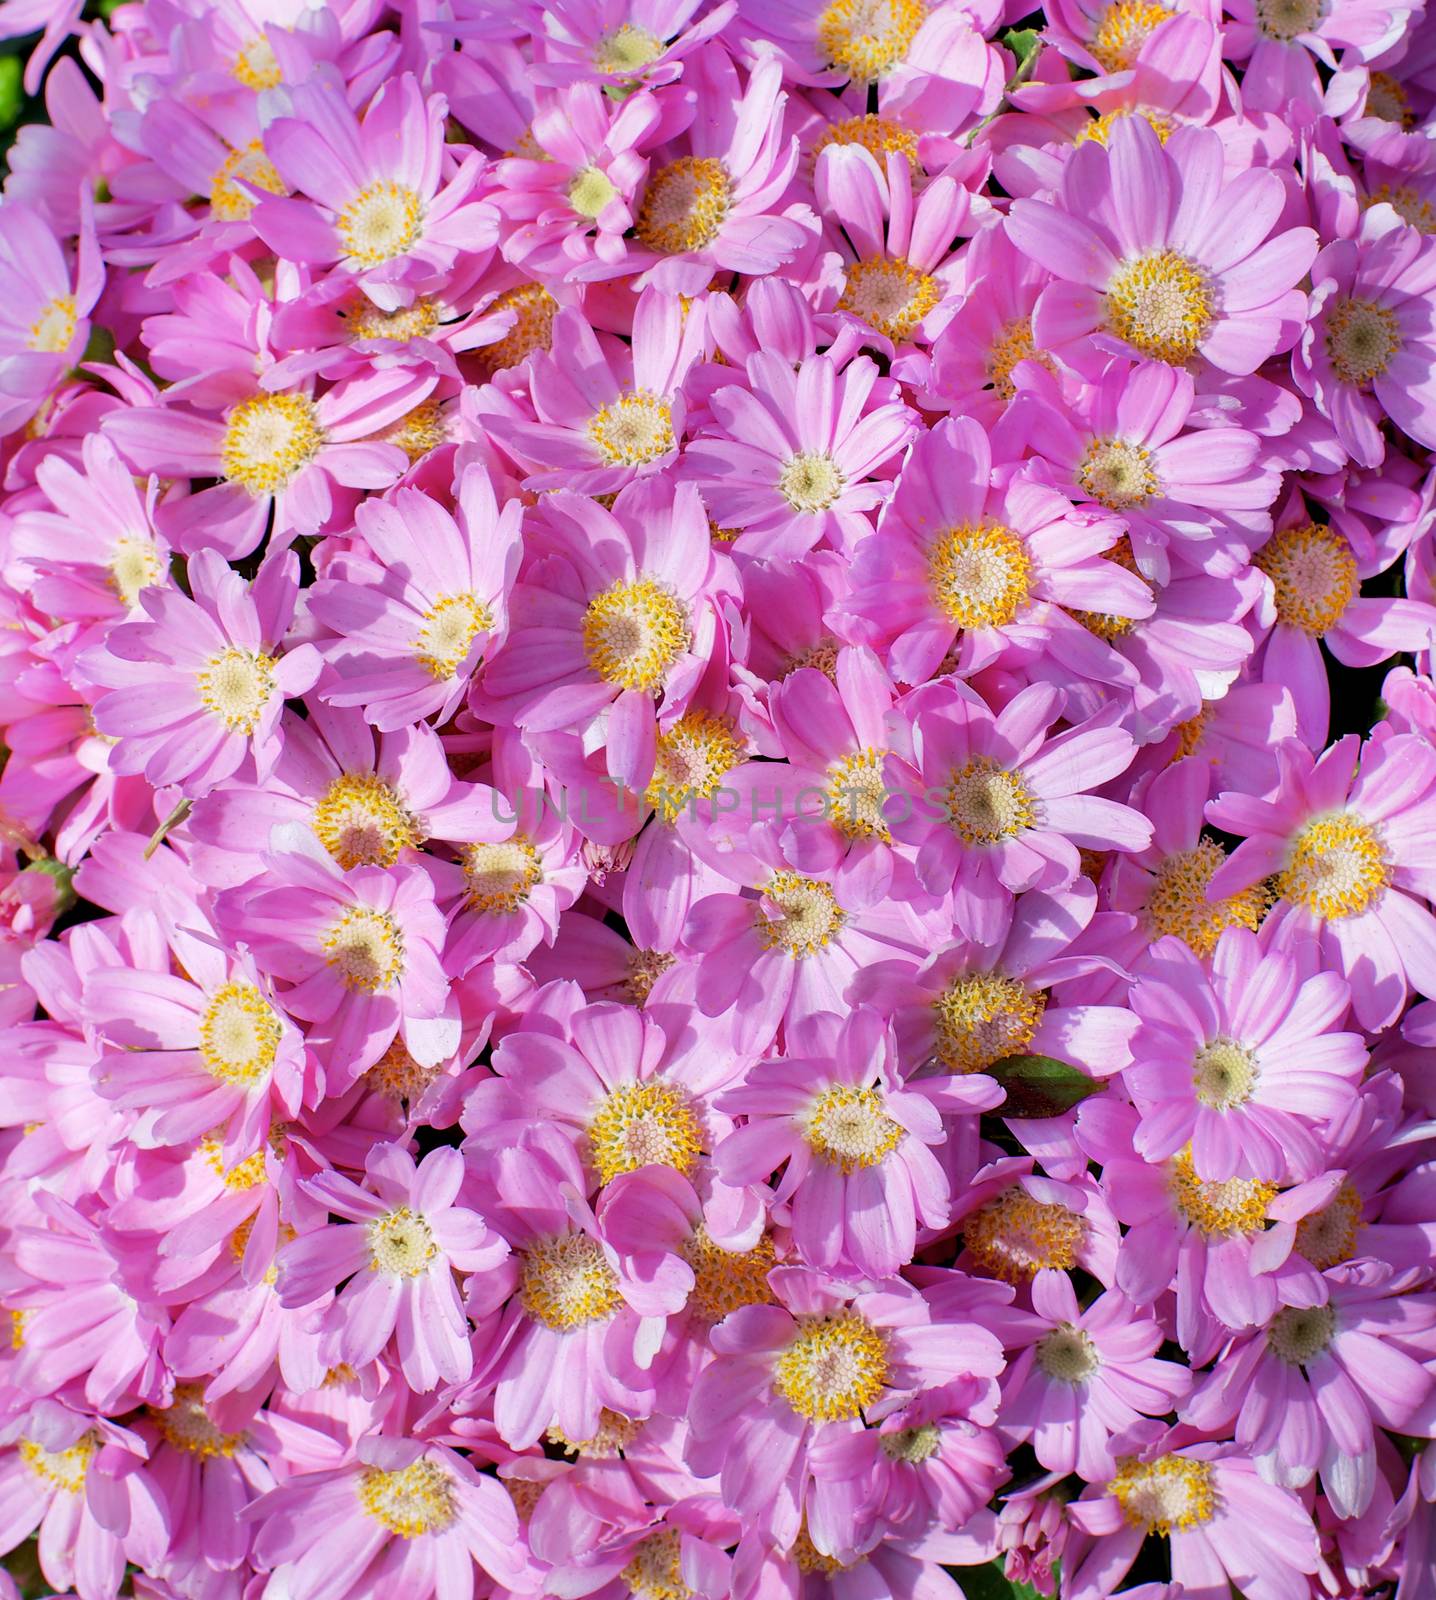 Background of Beauty Pink Daisy Chrysanthemum closeup Outdoors